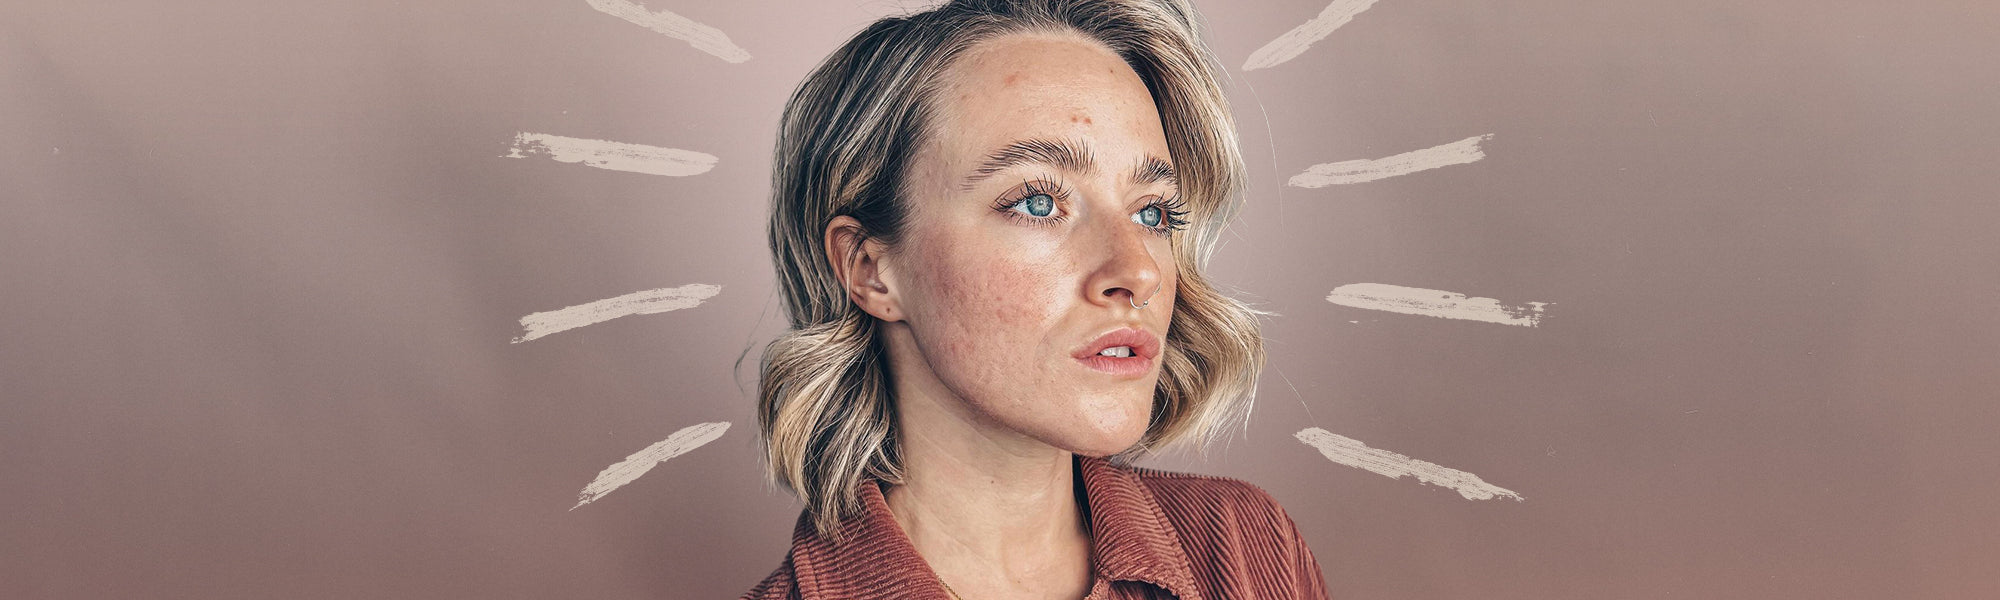 Skin Stories: Meet Jess Mackenzie